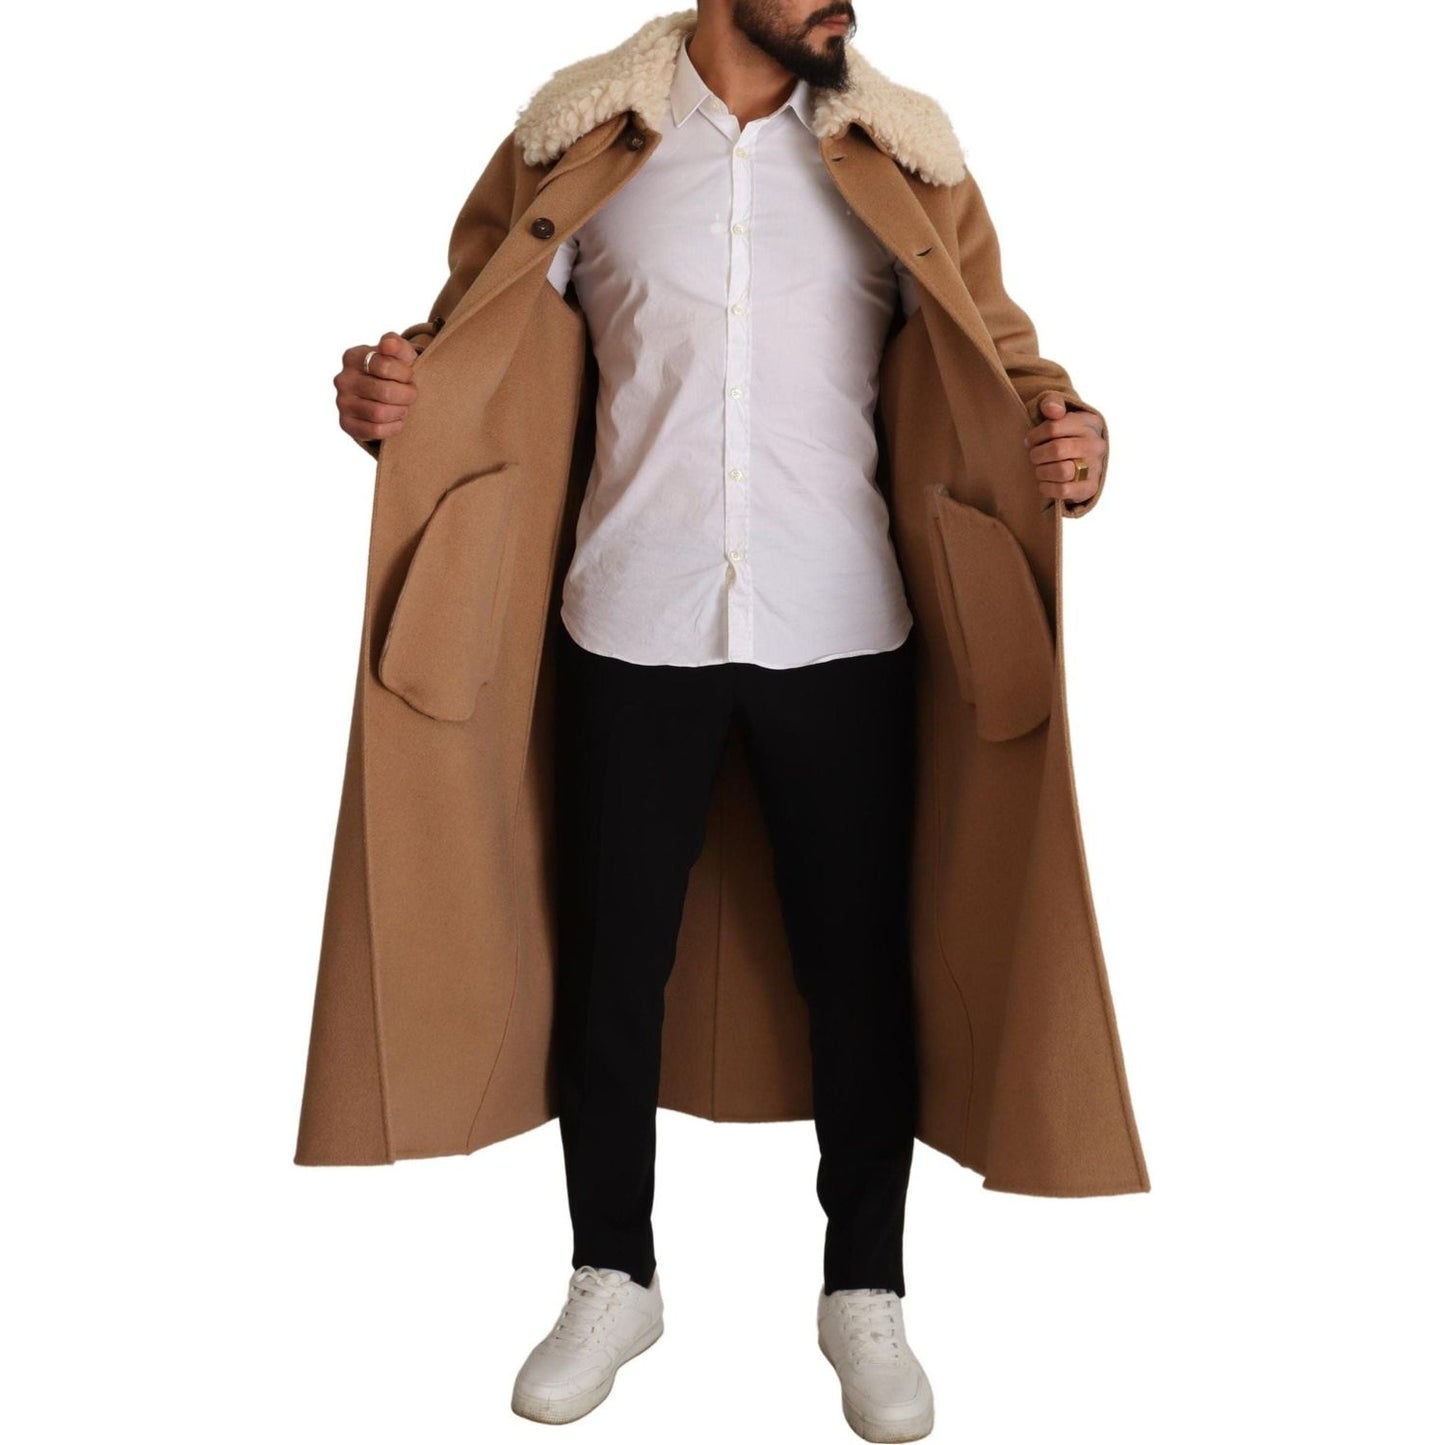 Dolce & Gabbana Opulent Beige Shearling-Collar Overcoat beige-camel-skin-cashmere-shearling-overcoat-jacket